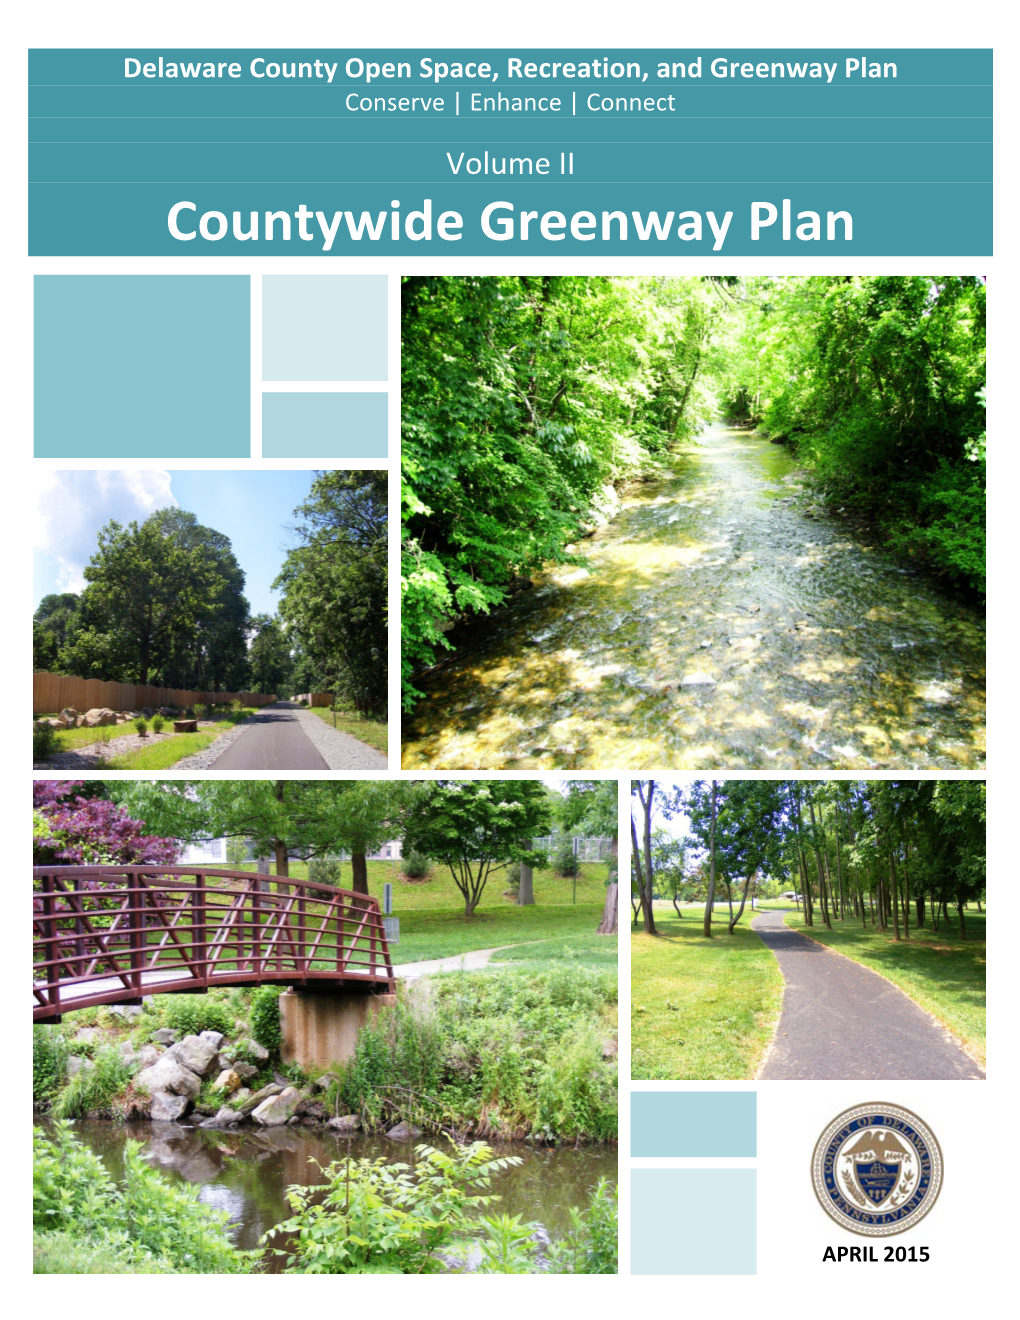 Volume II: Countywide Greenway Plan